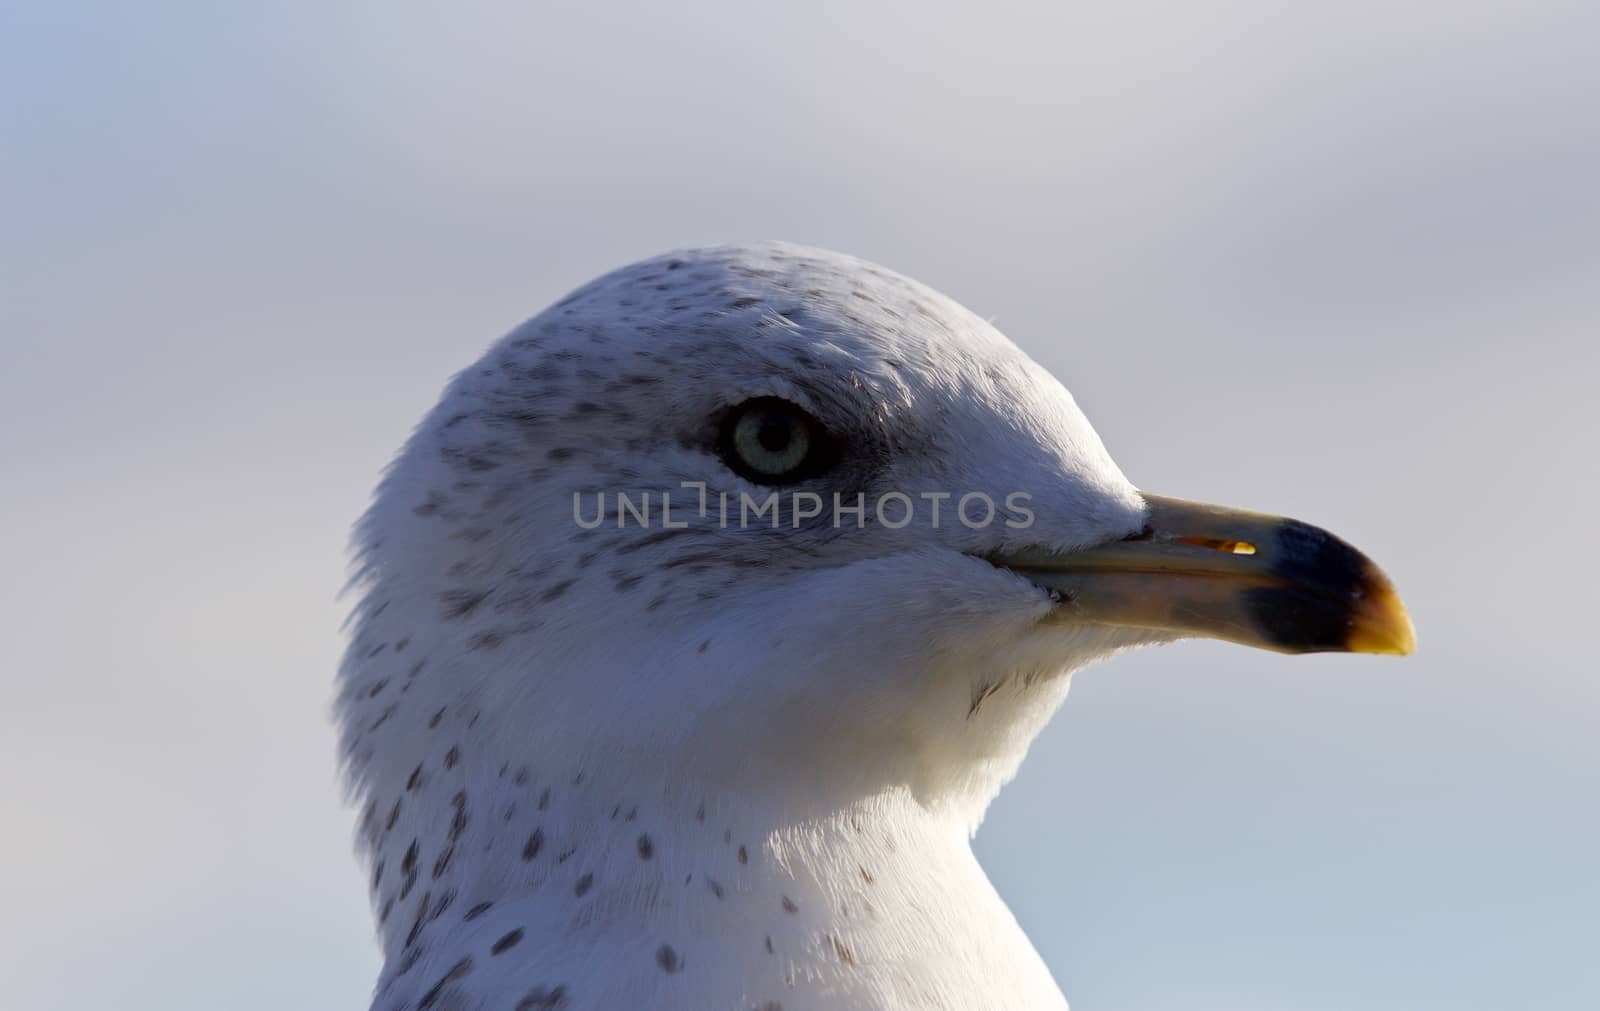 Amazing portrait of a cute beautiful gull by teo